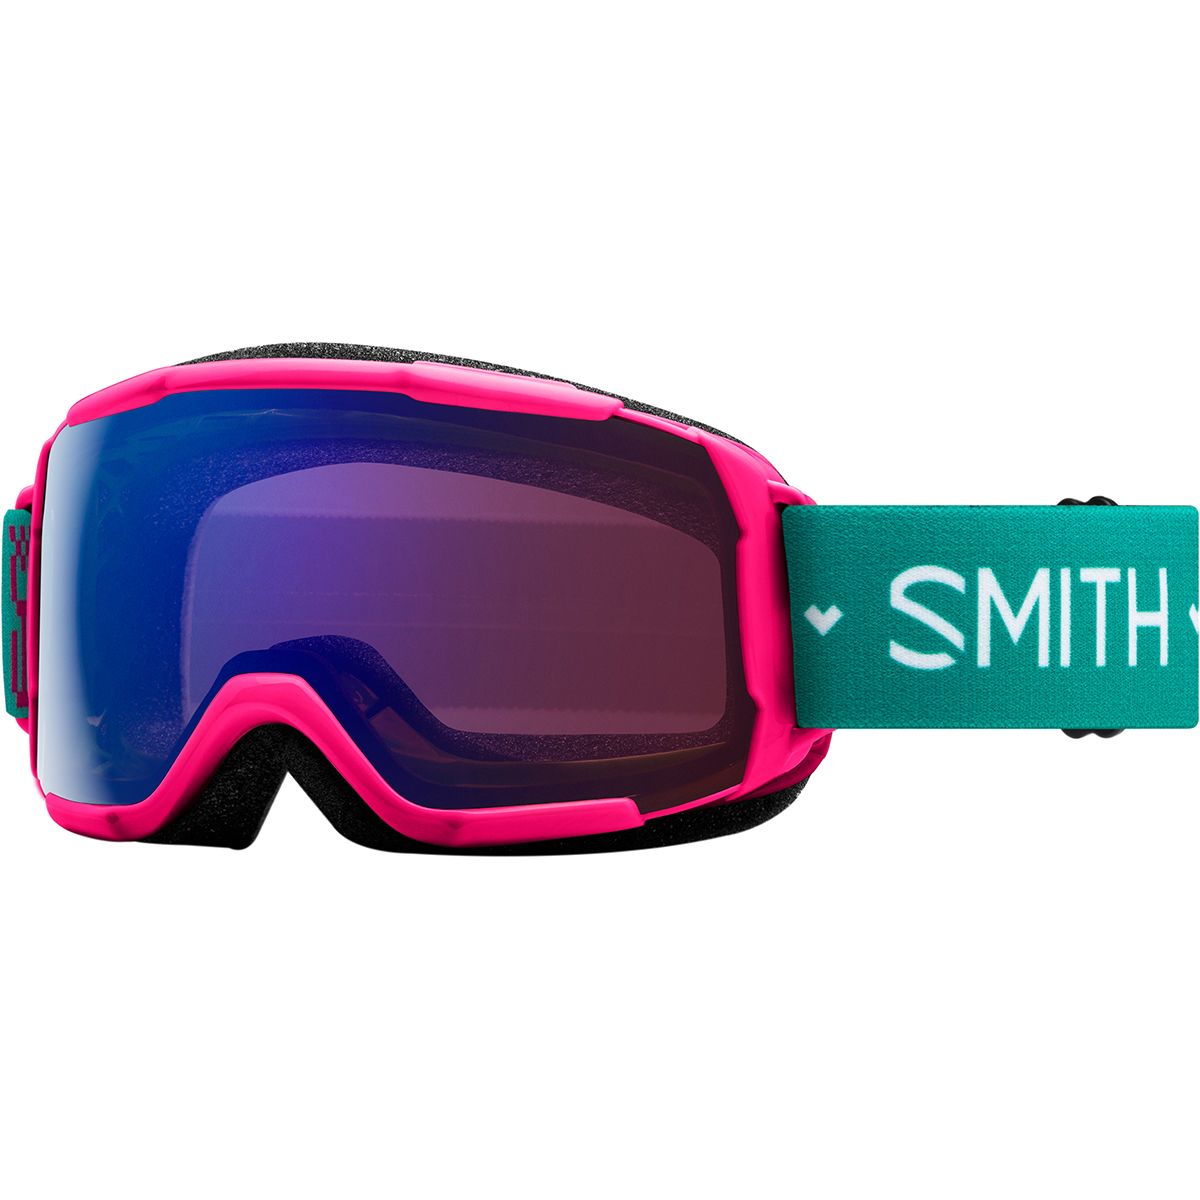 Smith Grom ChromaPop Goggles - Kids' Pink Flowers/Chroma Storm Rose Flash